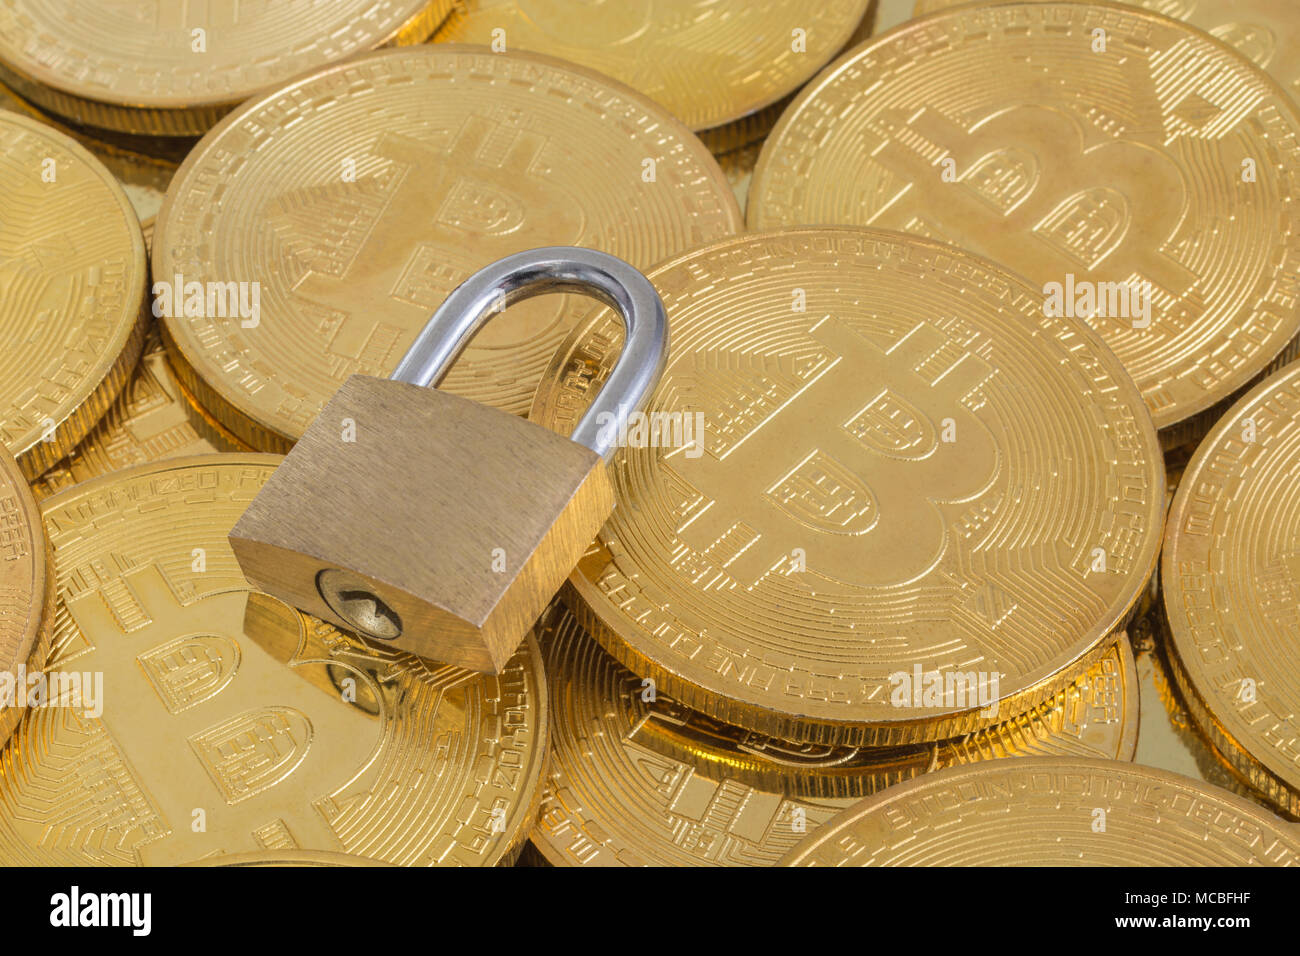 Macro-photo of small padlock with gold Bitcoins - as visual metaphor for Blochain / Bitcoin blockchain. China Bitcoin conference metaphor. Stock Photo